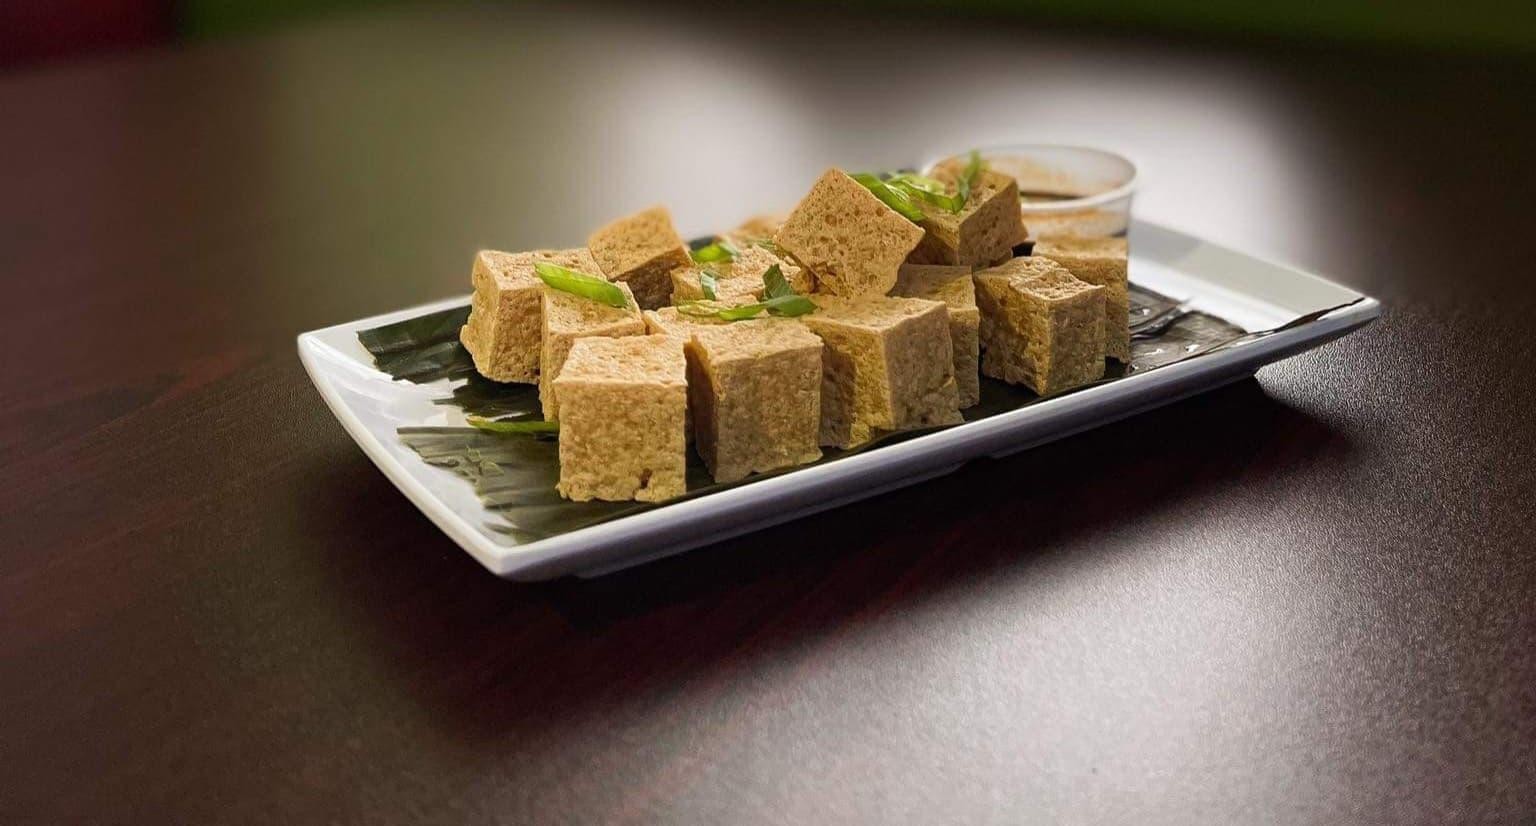 03. Fried Tofu